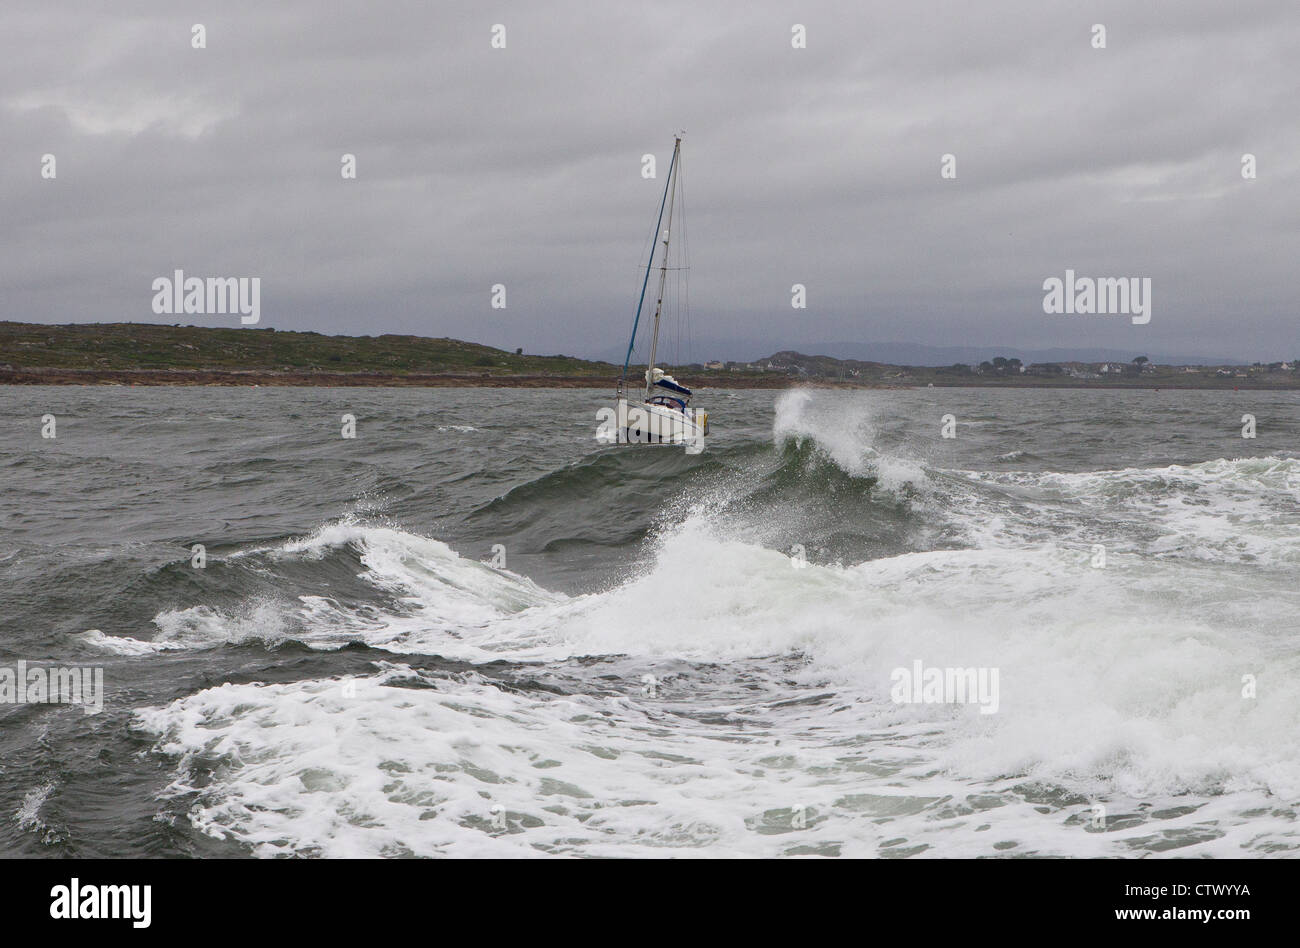 yacht in stormy seas Stock Photo